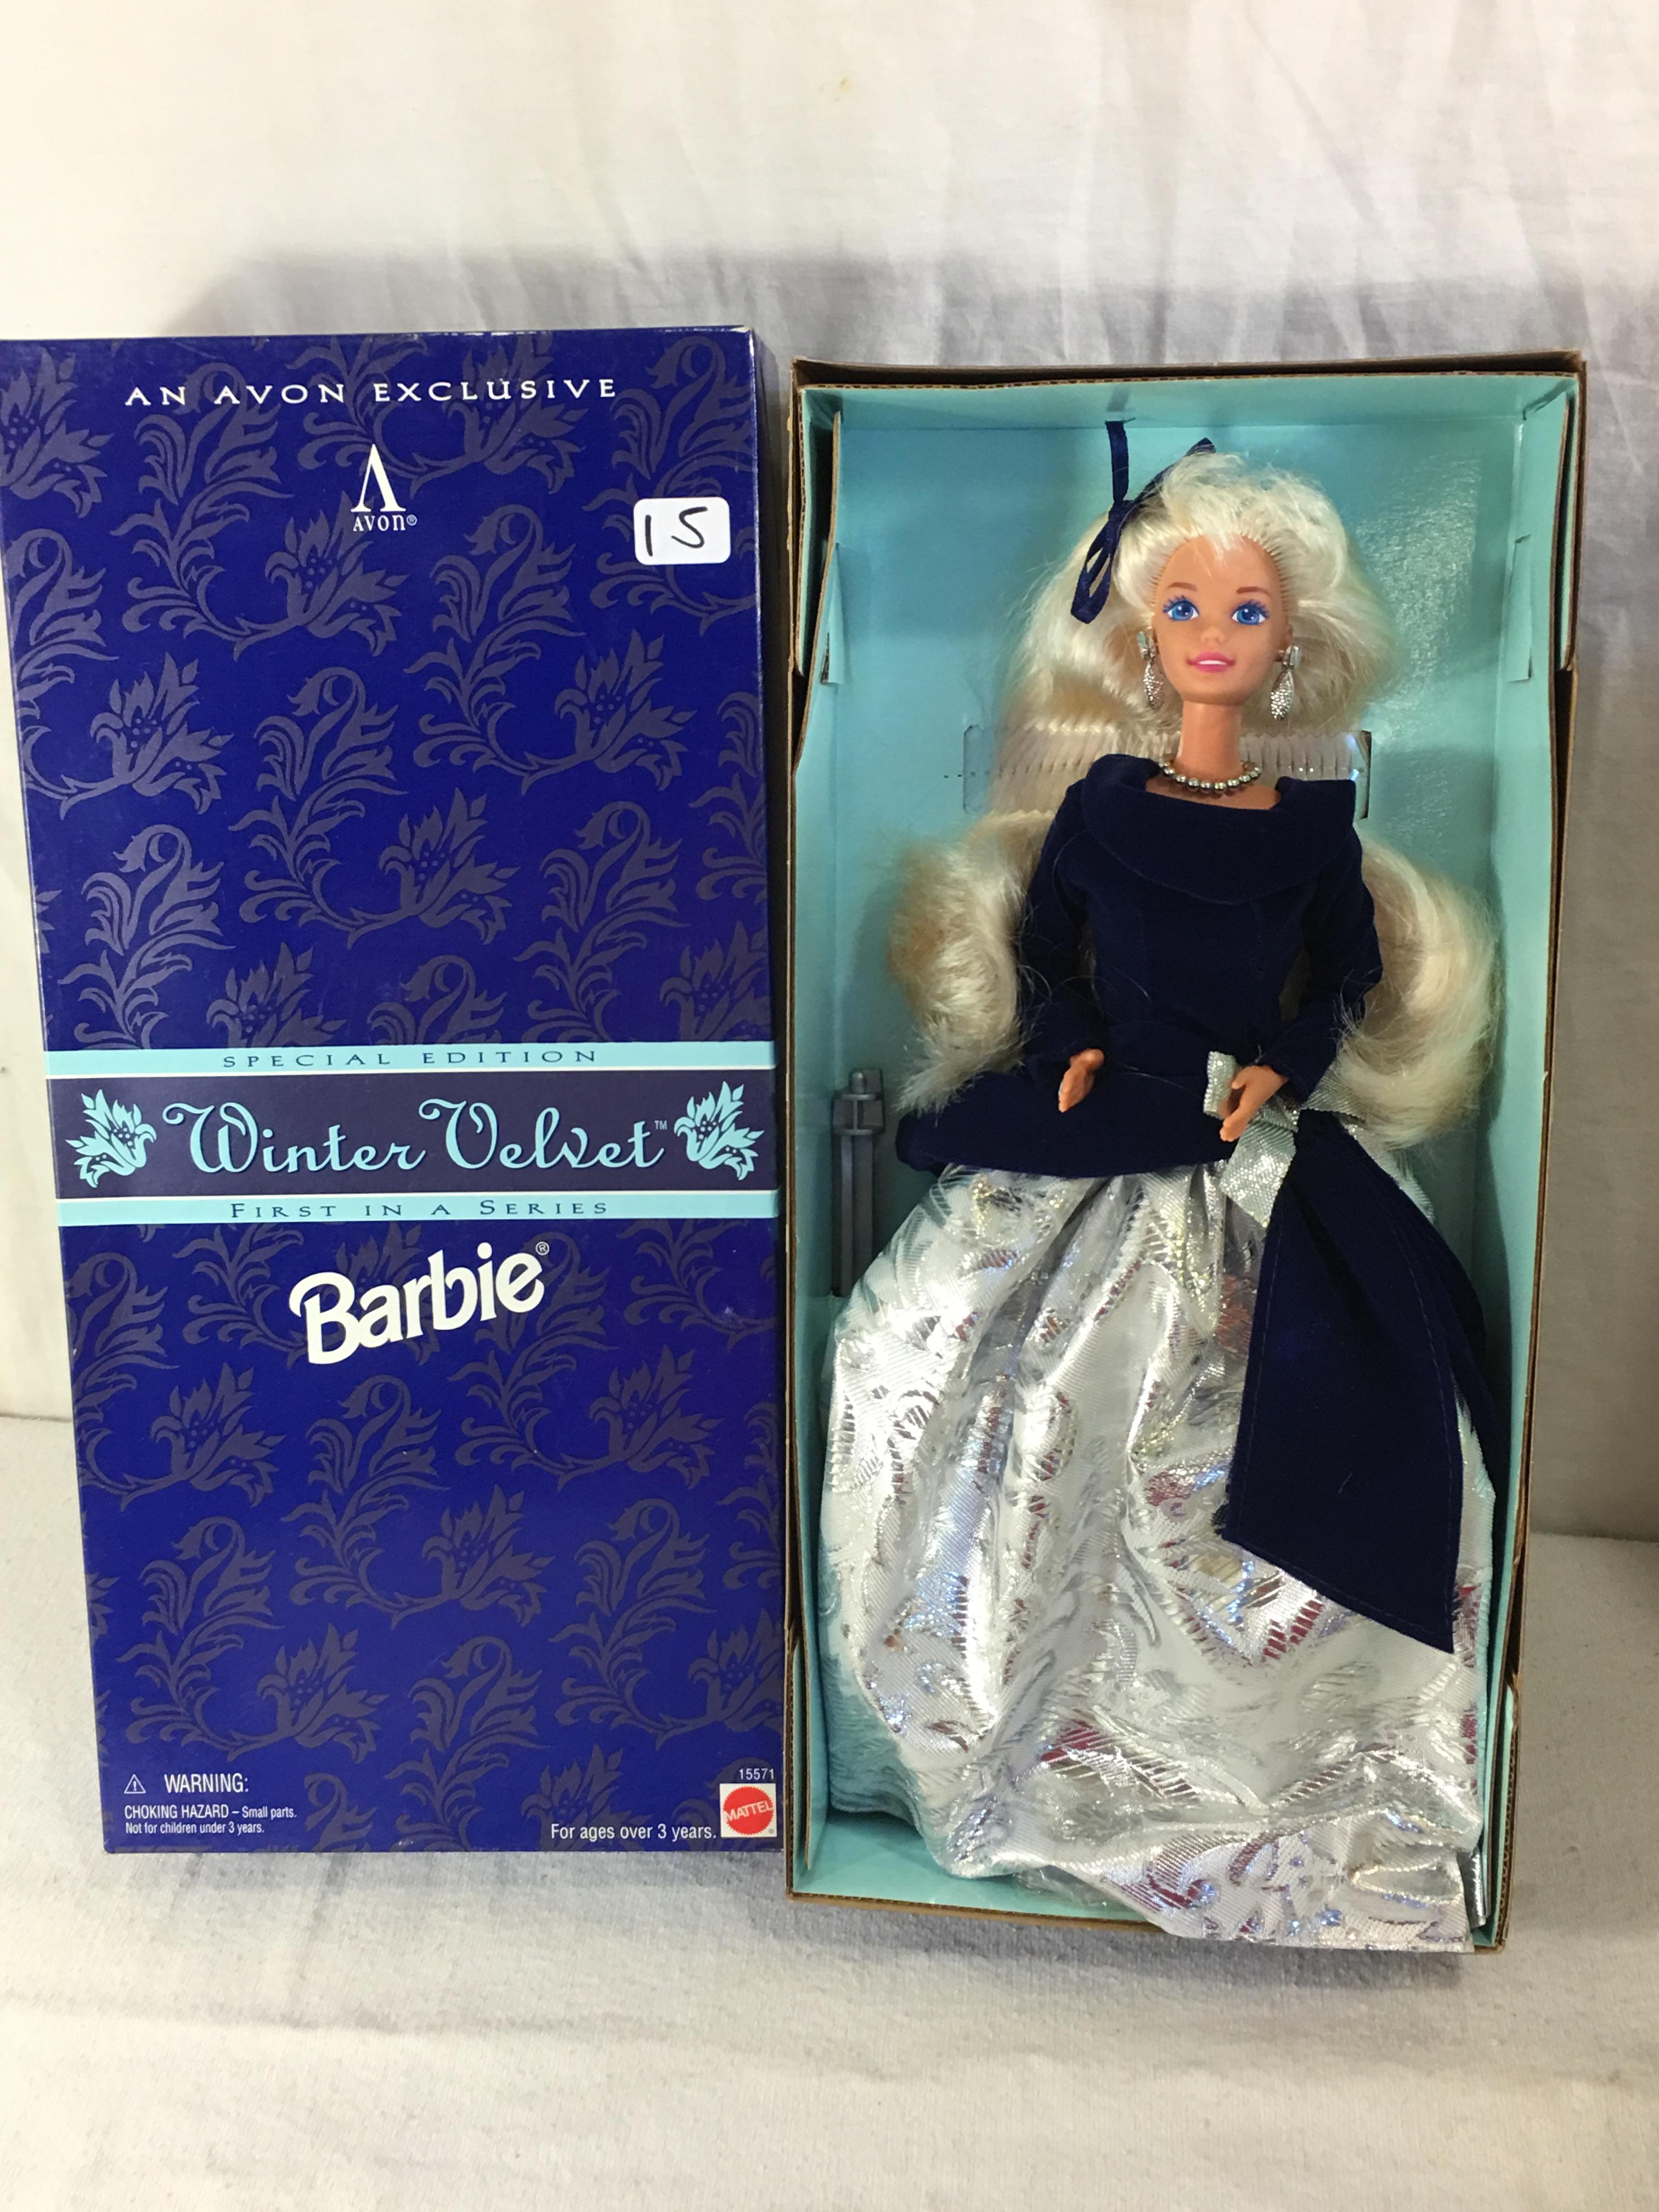 NIB Collector Avon Exclusive Winter Velvet Barbie Doll Box: 13"x6"